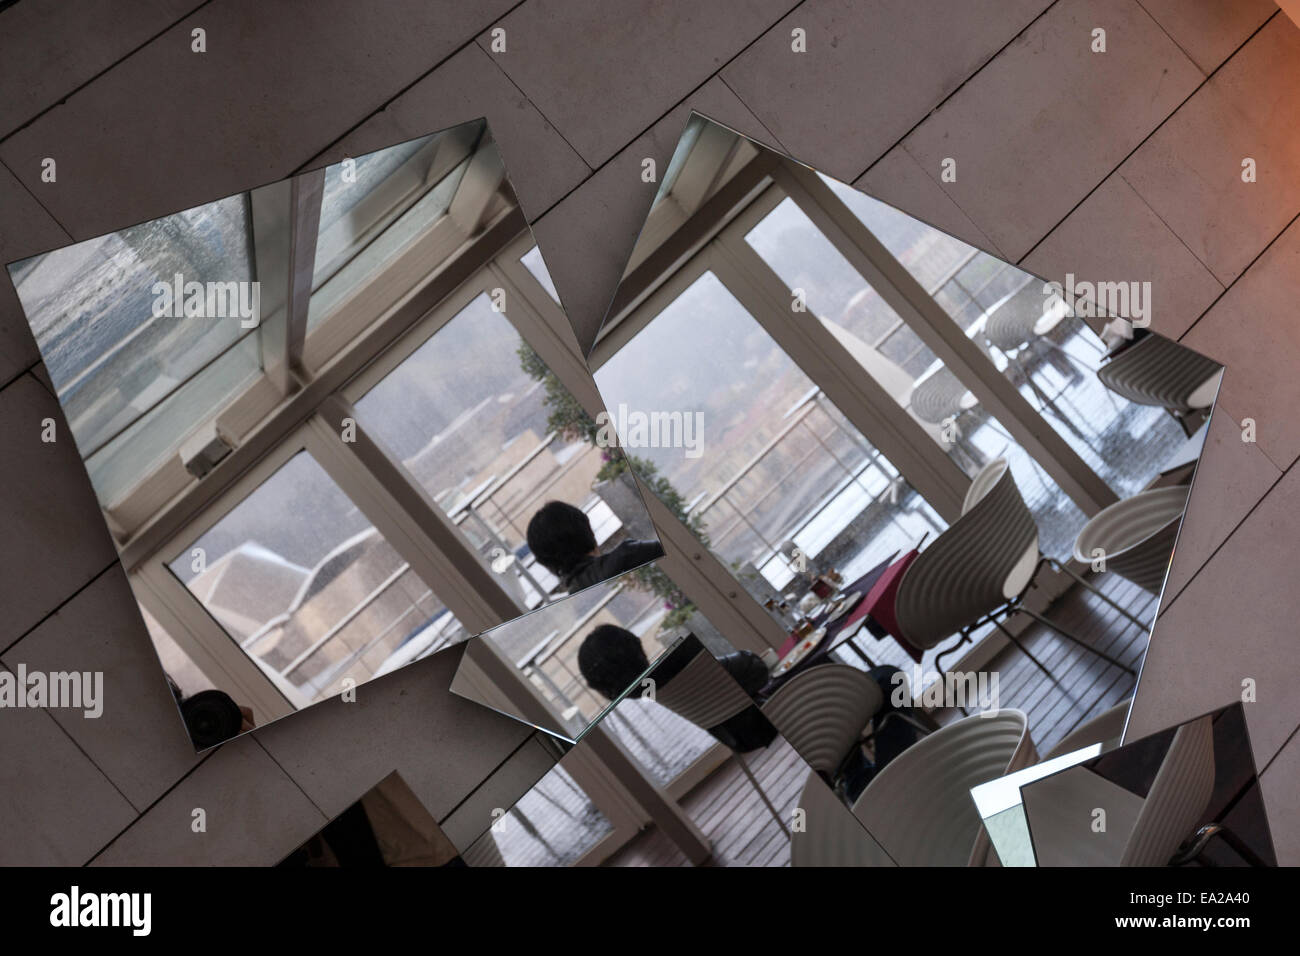 Vue du musée Guggenheim à partir de miroirs de l'hôtel Silken Gran Hotel Domine restaurant Banque D'Images